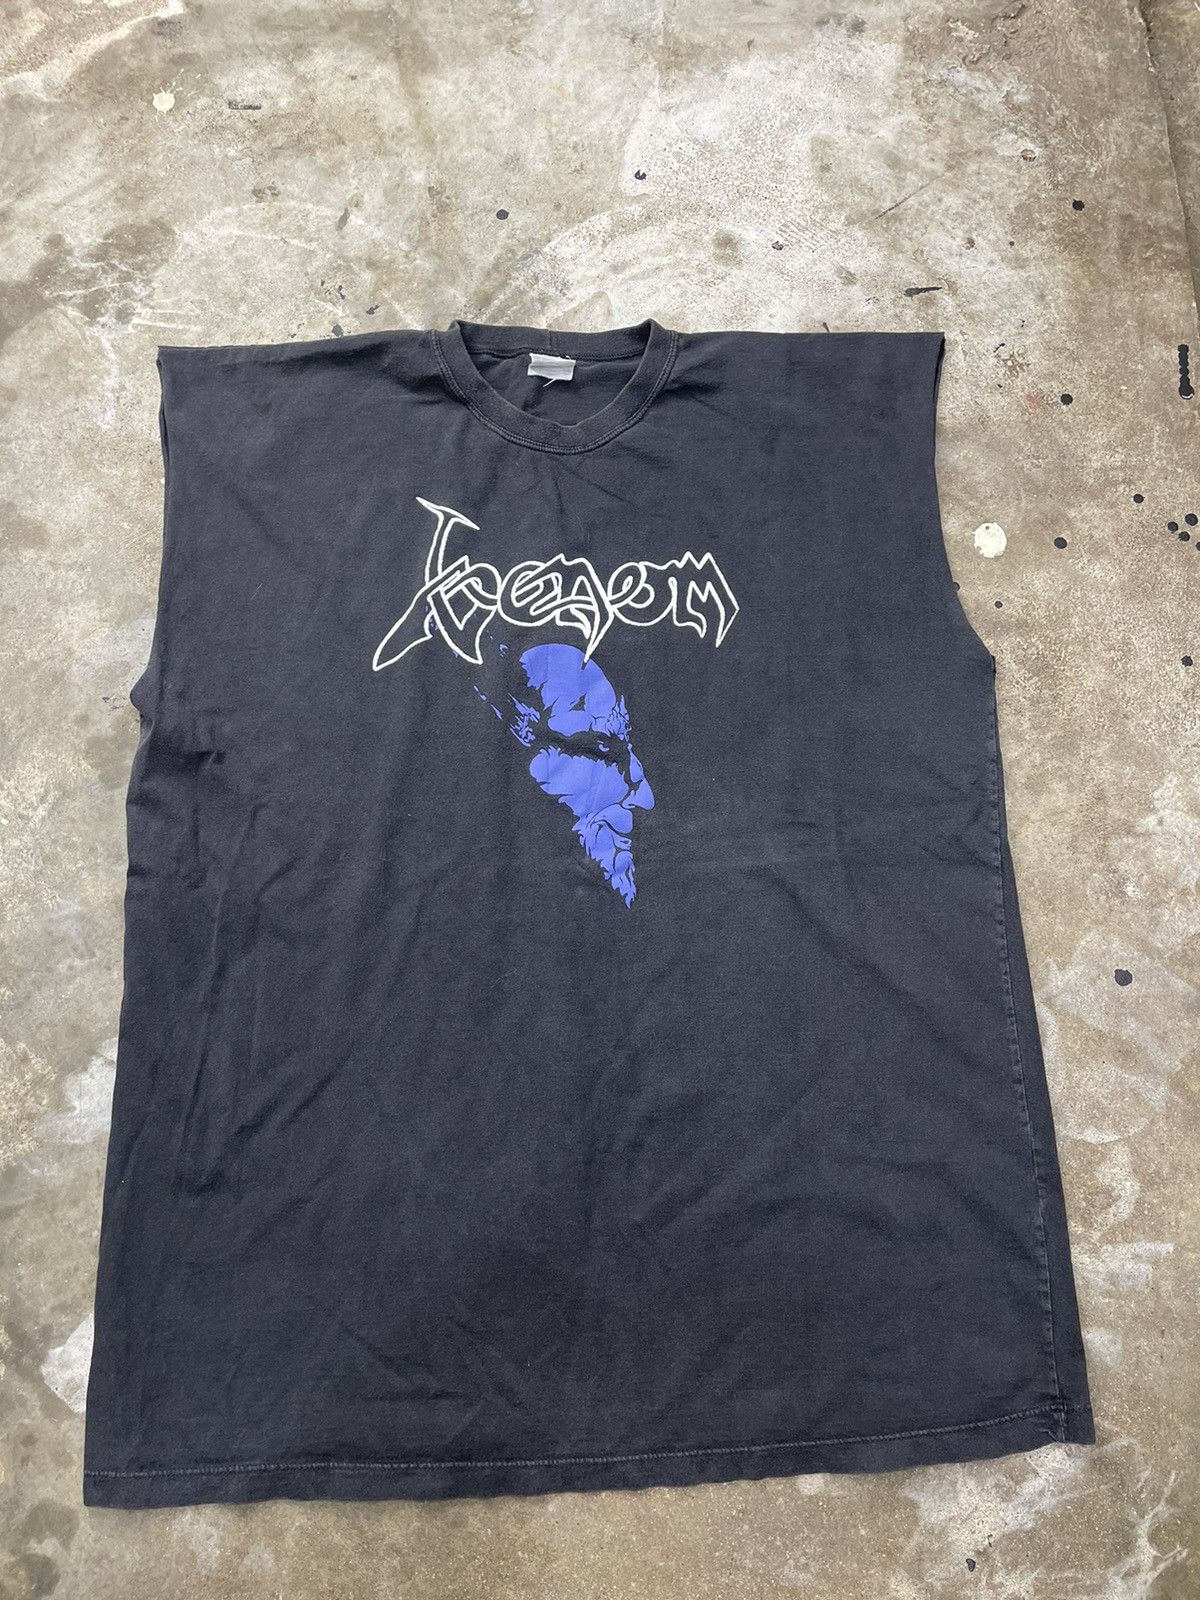 Vintage Chopped 80’s Venom Black Metal Tee Shirt Size US XL / EU 56 / 4 - 2 Preview